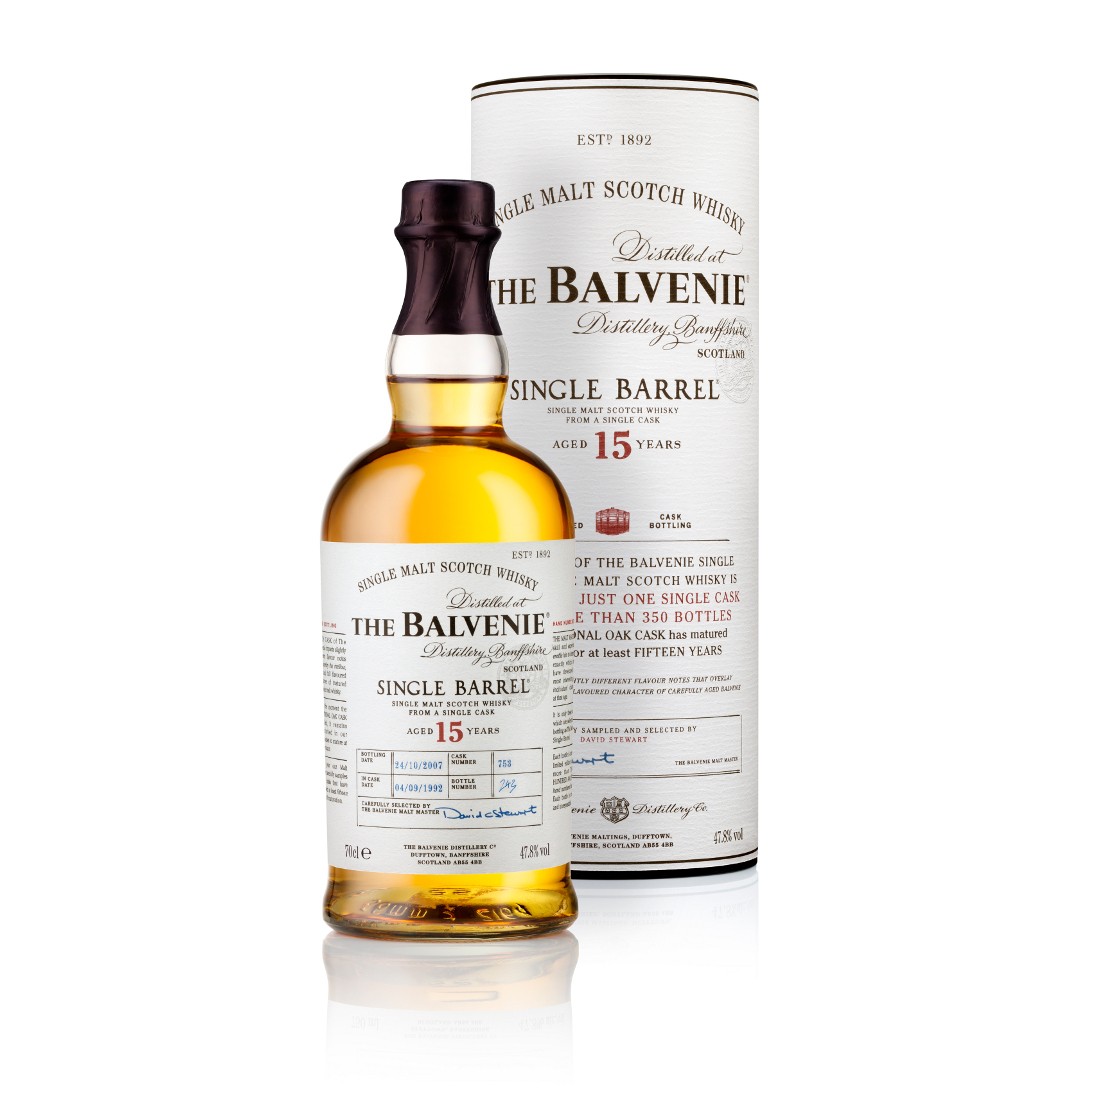 Balvenie single malt scotch